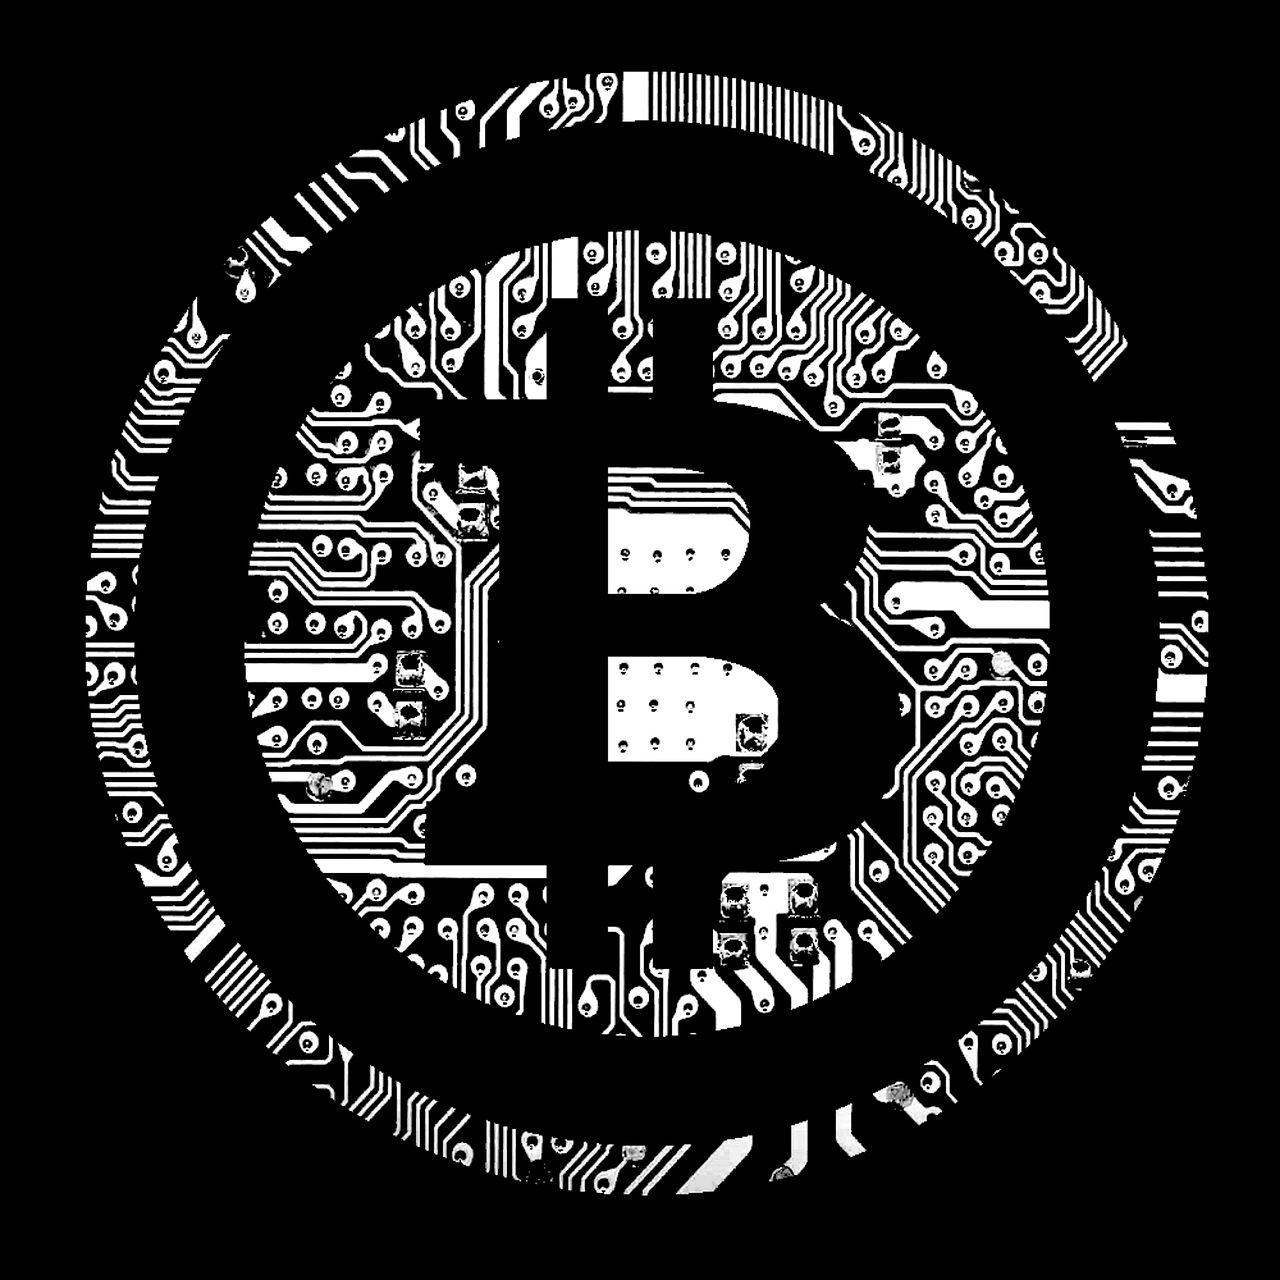 www.crypto-news-flash.com